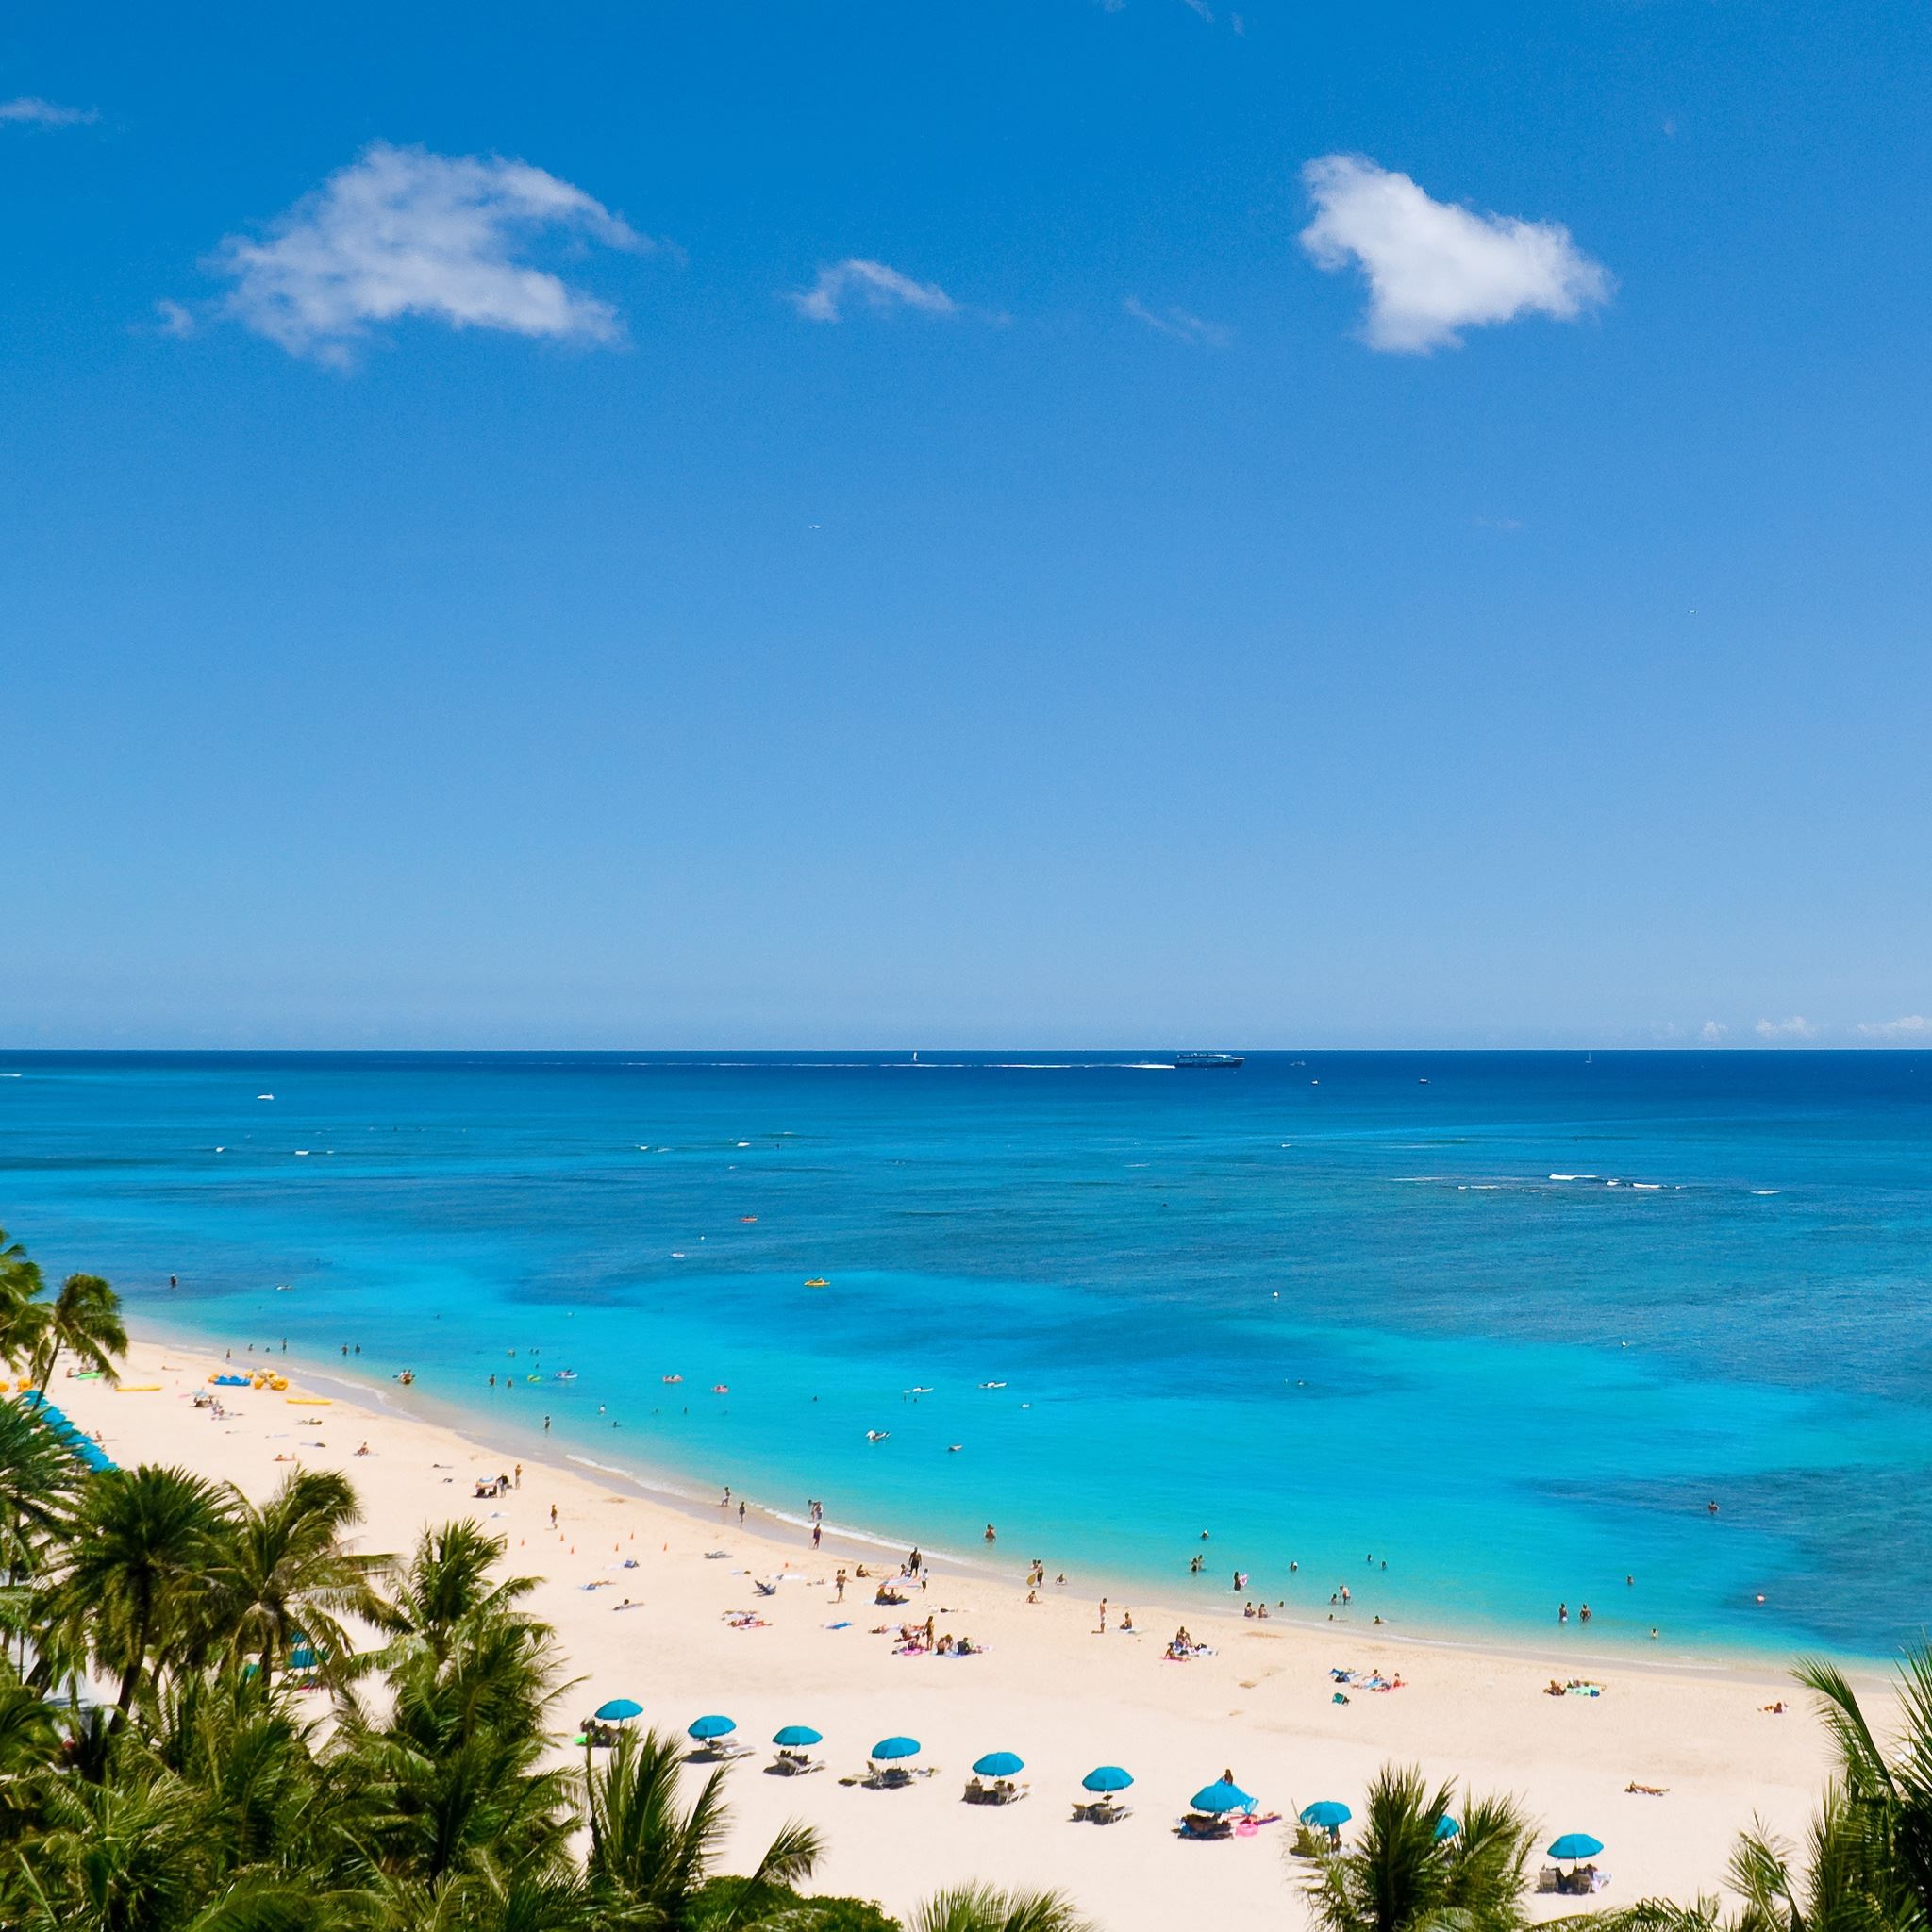 Waikiki Beach And Pacific Ocean Ipad Air Wallpapers Free Download